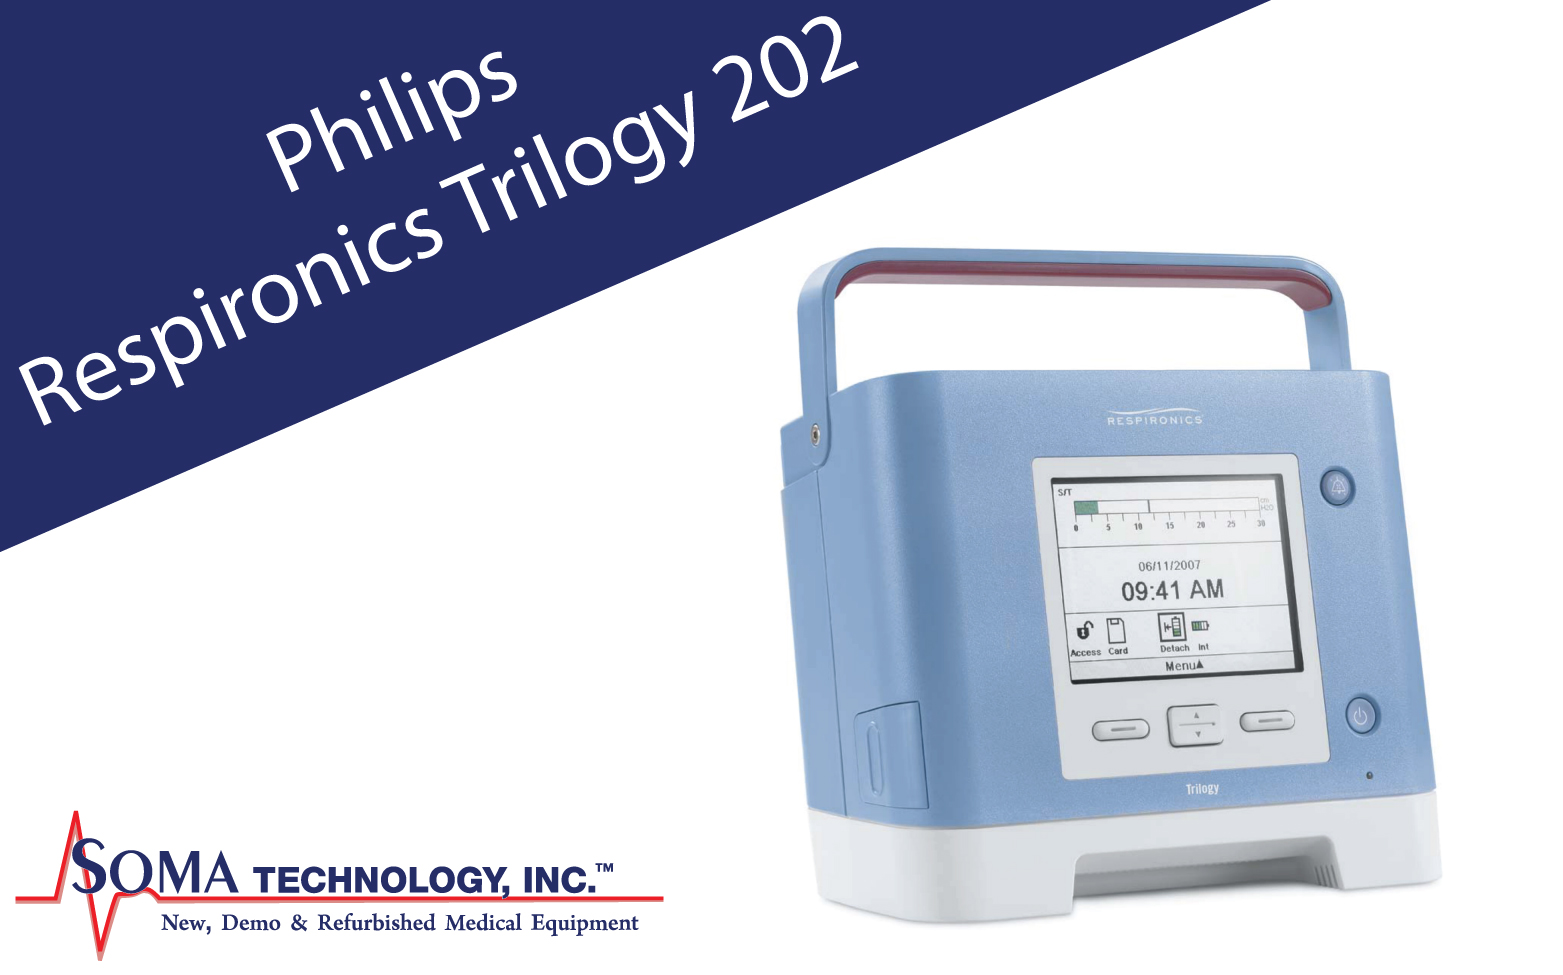 Trilogy Ventilator - Philips Respironics Trilogy 202 - Soma Technology, Inc.